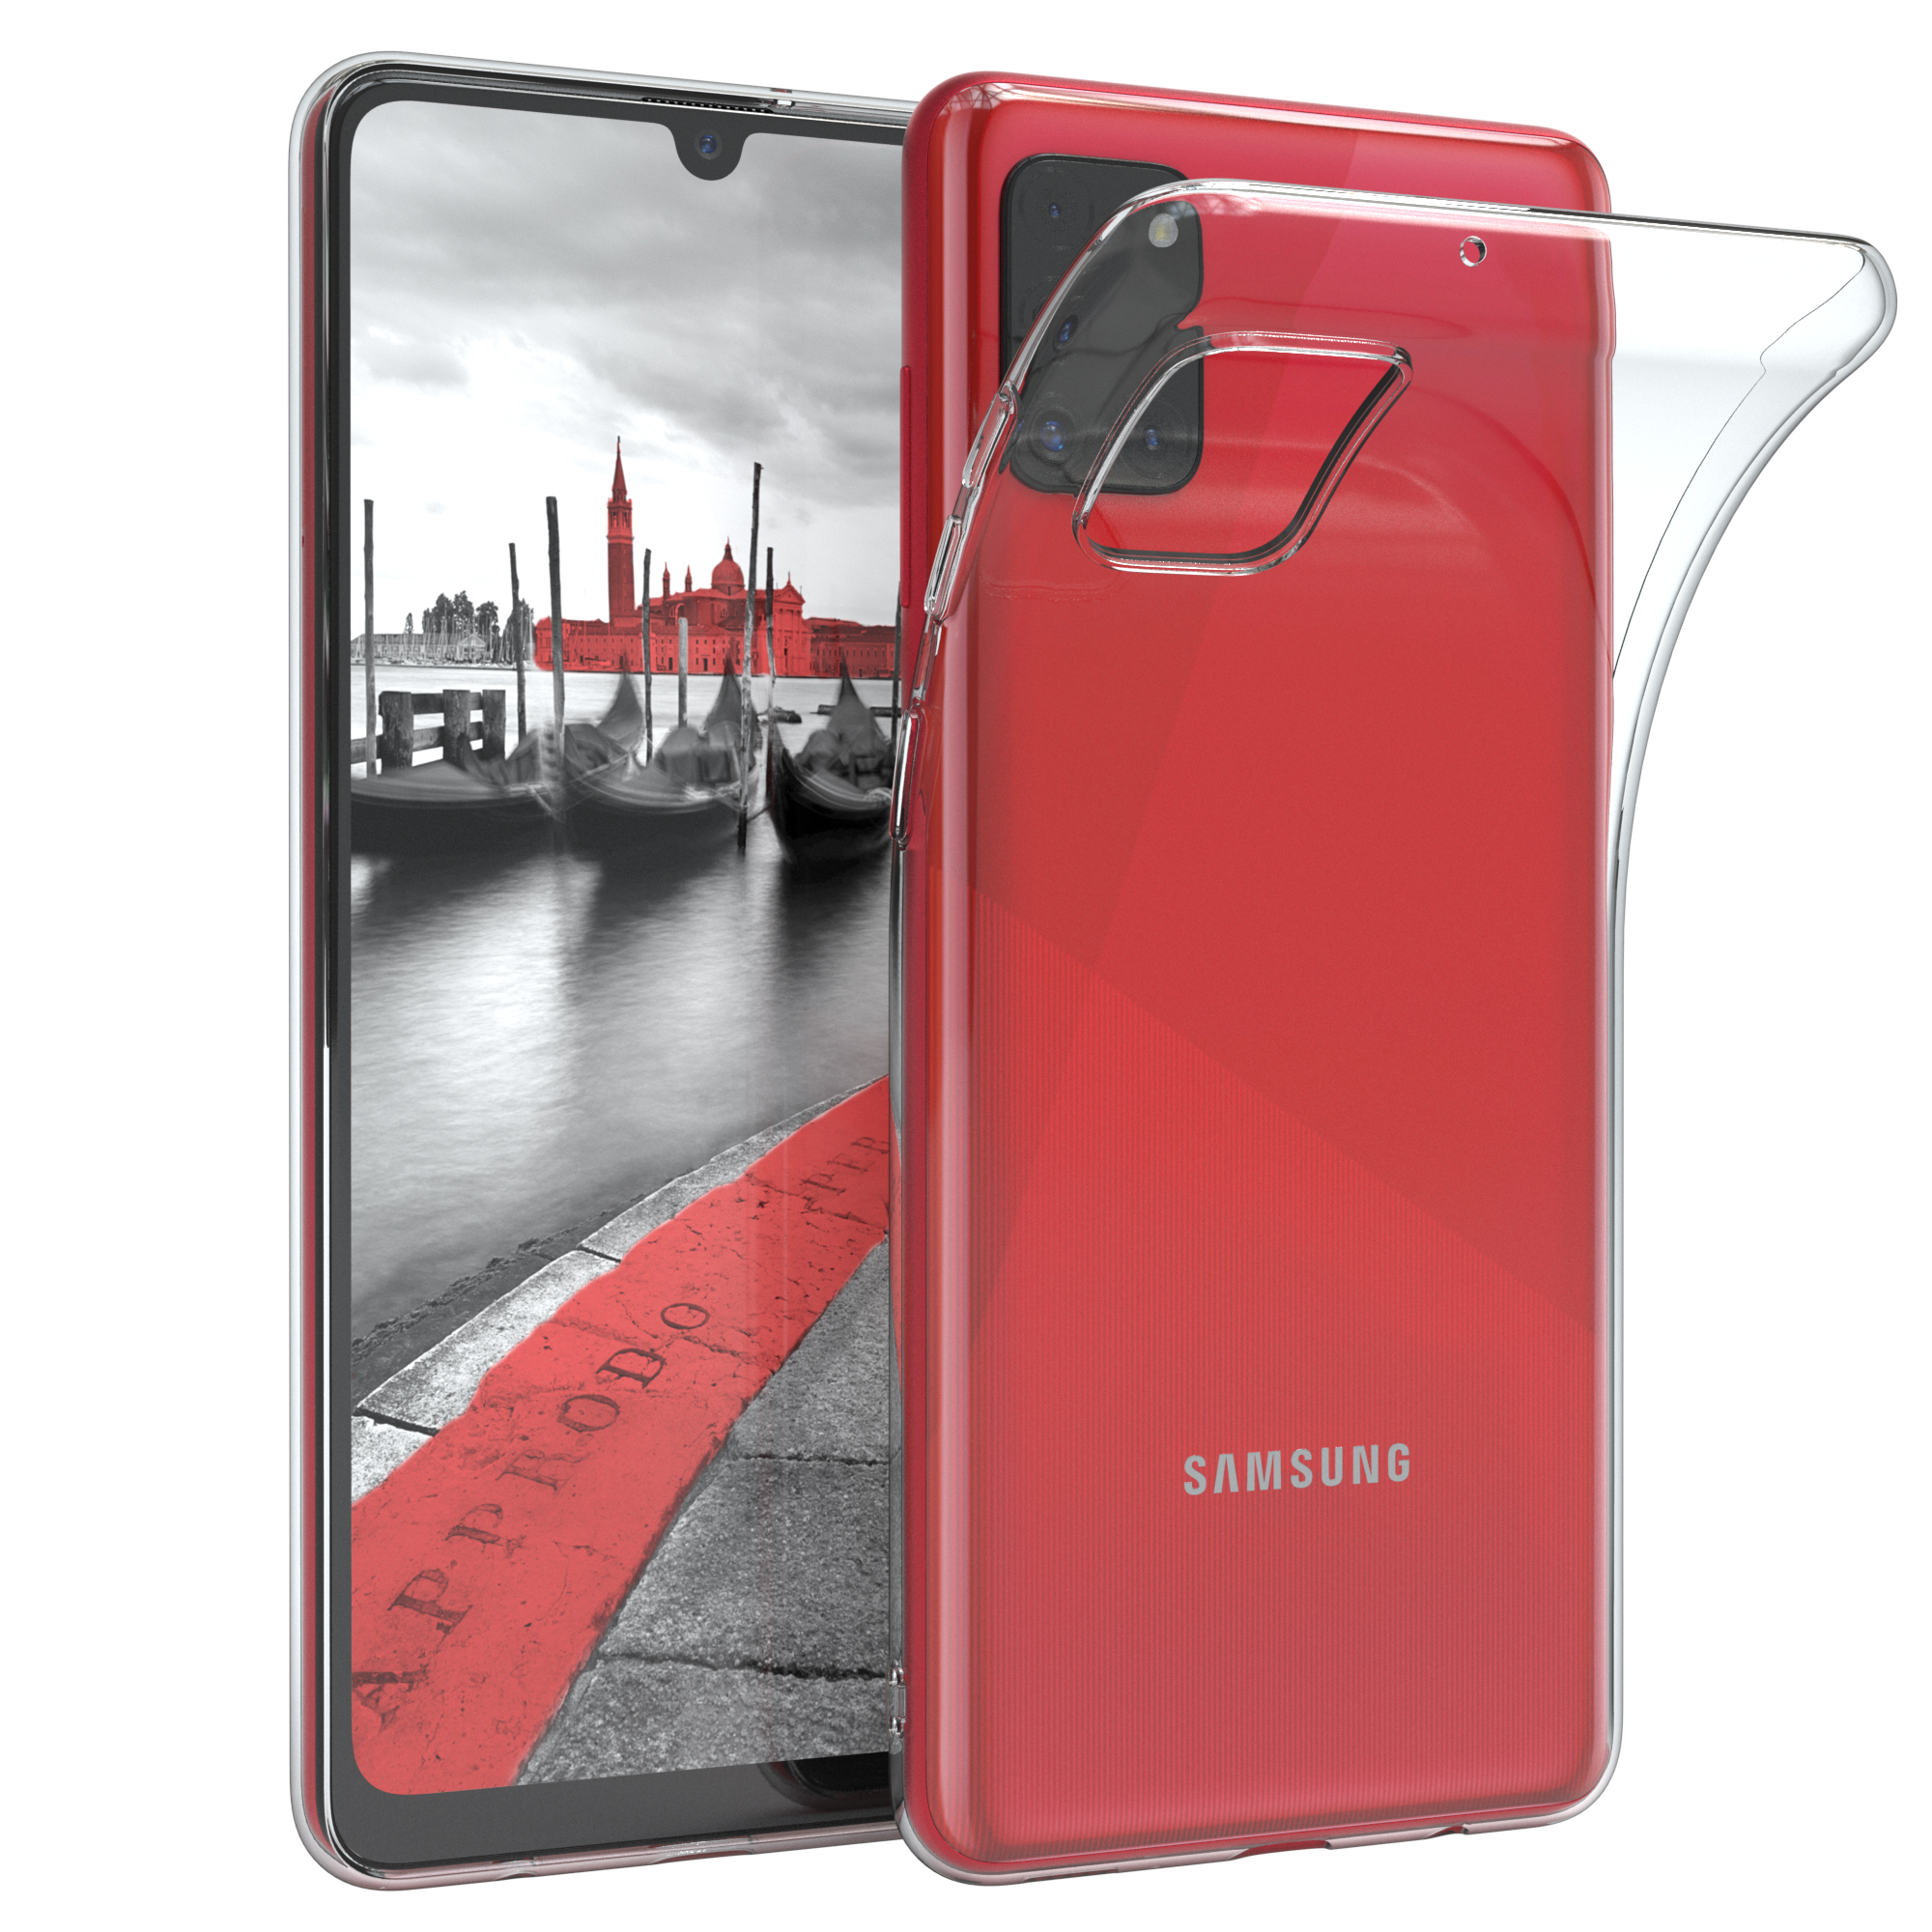 EAZY CASE Slimcover Galaxy Durchsichtig Clear, A31, Samsung, Backcover